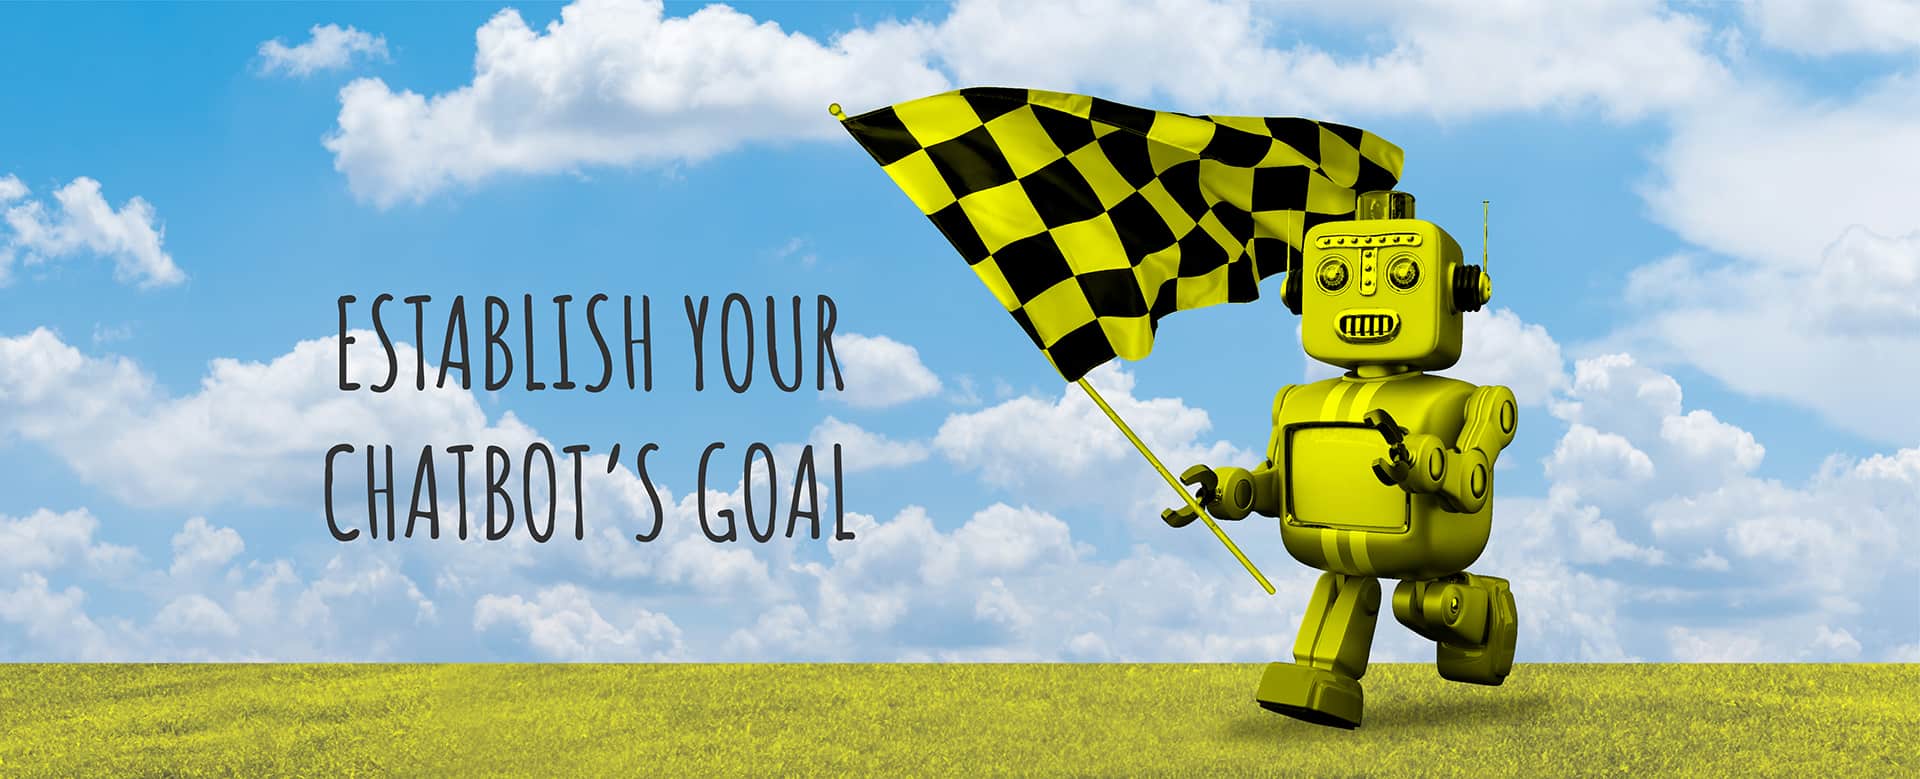 Establish Your Chatbot’s Goal